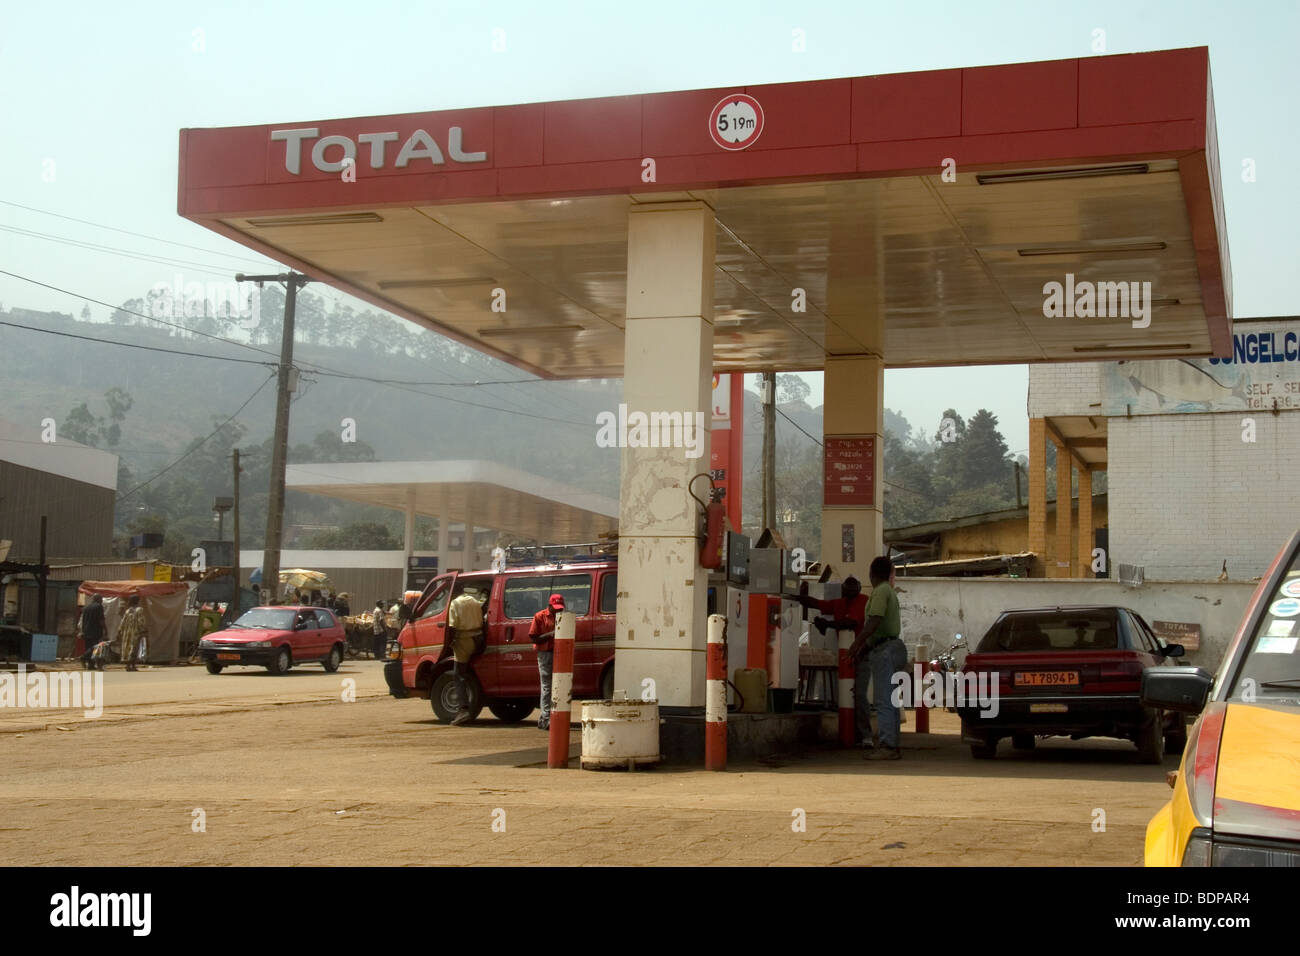 Total petrol station Bamenda Northwest Province Cameroun West Africa Stock Photo